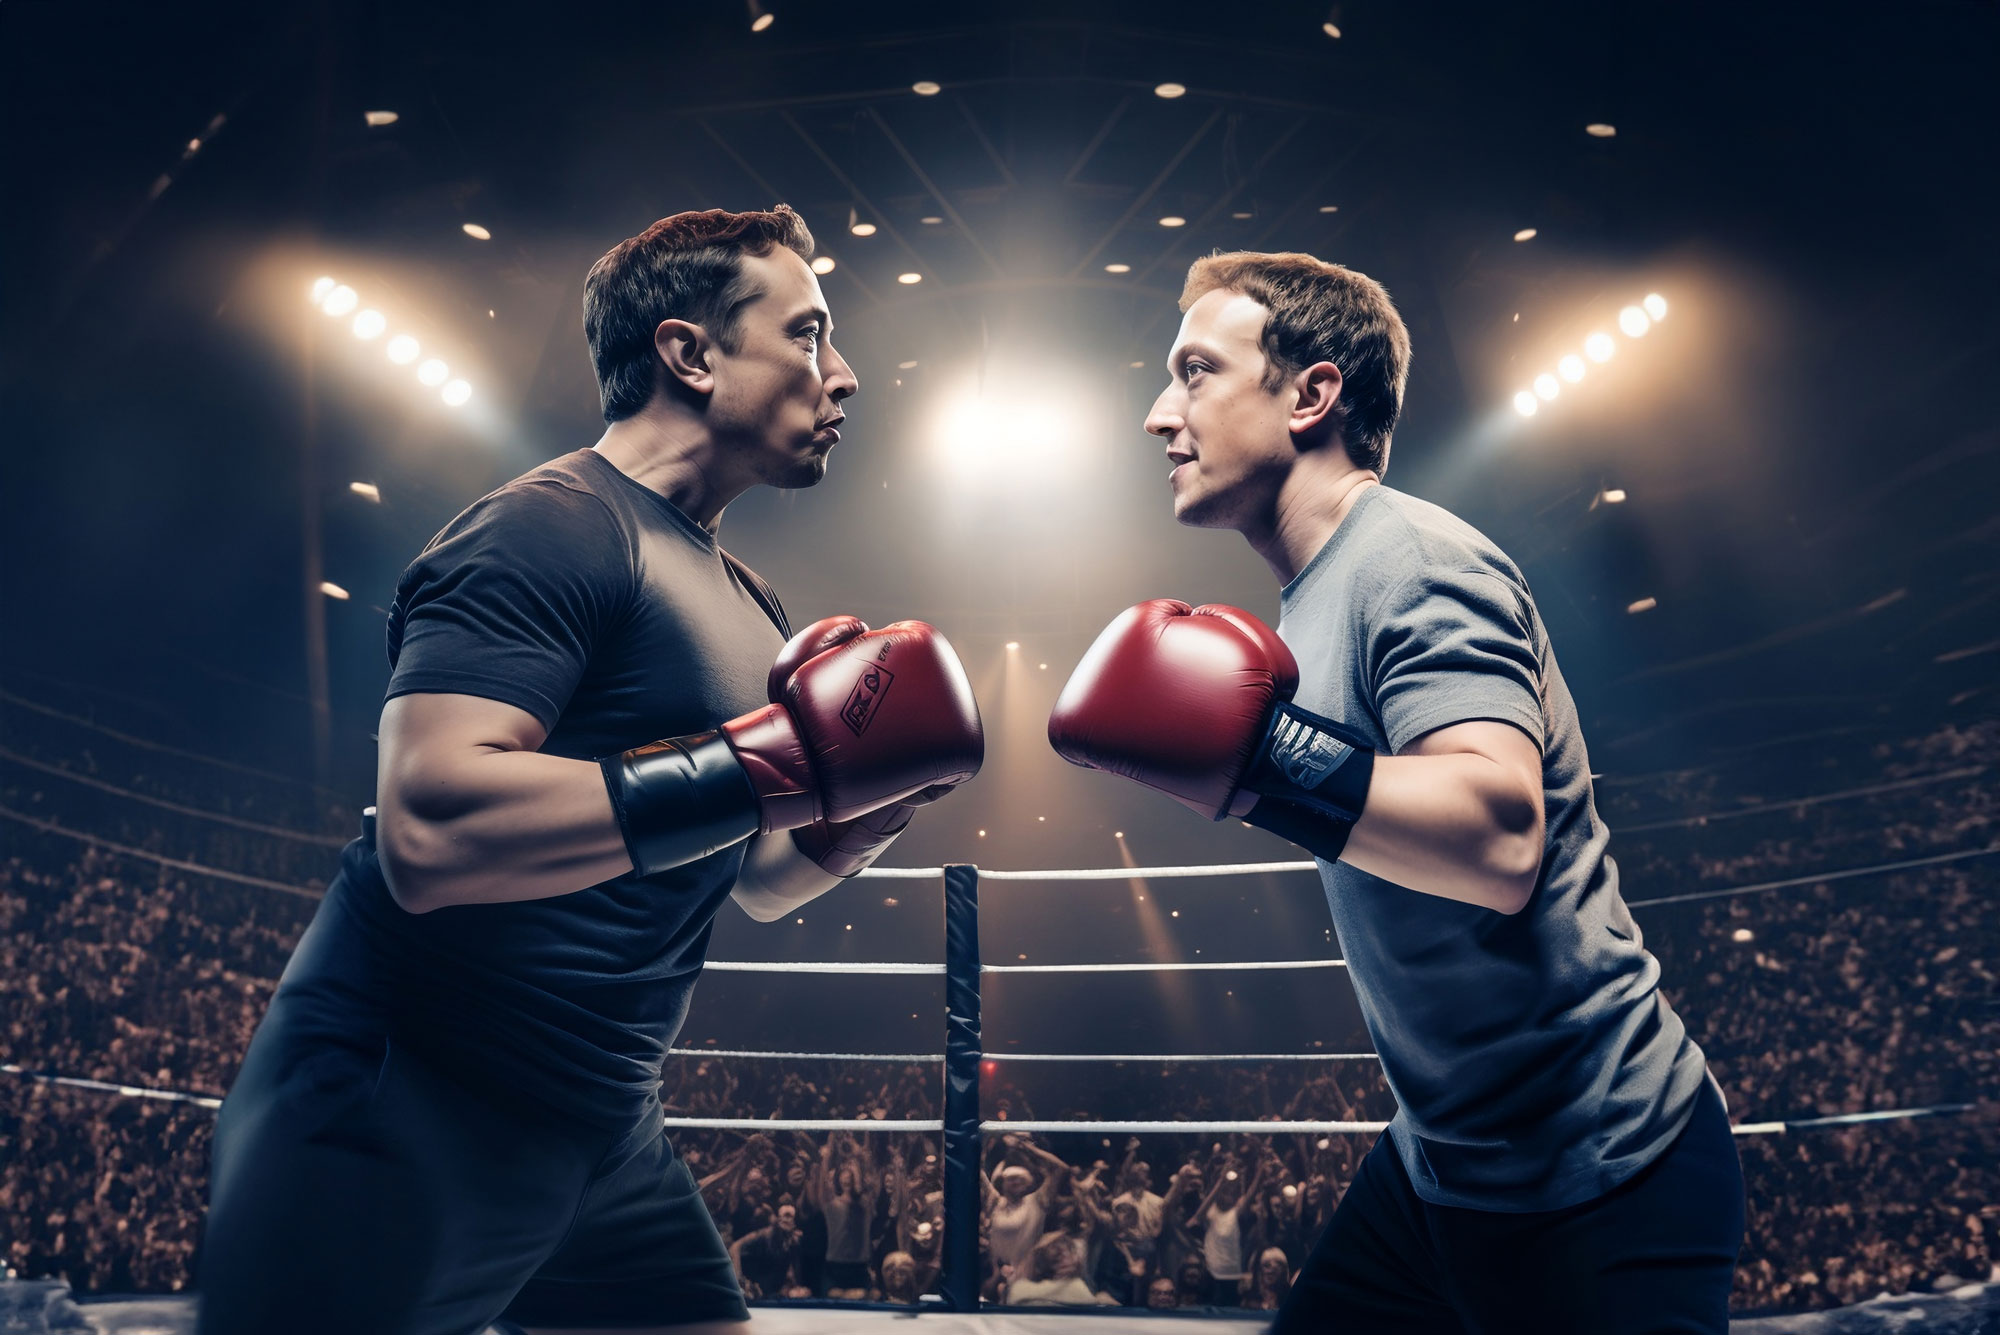 Marketing Tips Behind the Elon Musk vs. Mark Zuckerberg Fight Challenge HiT Land